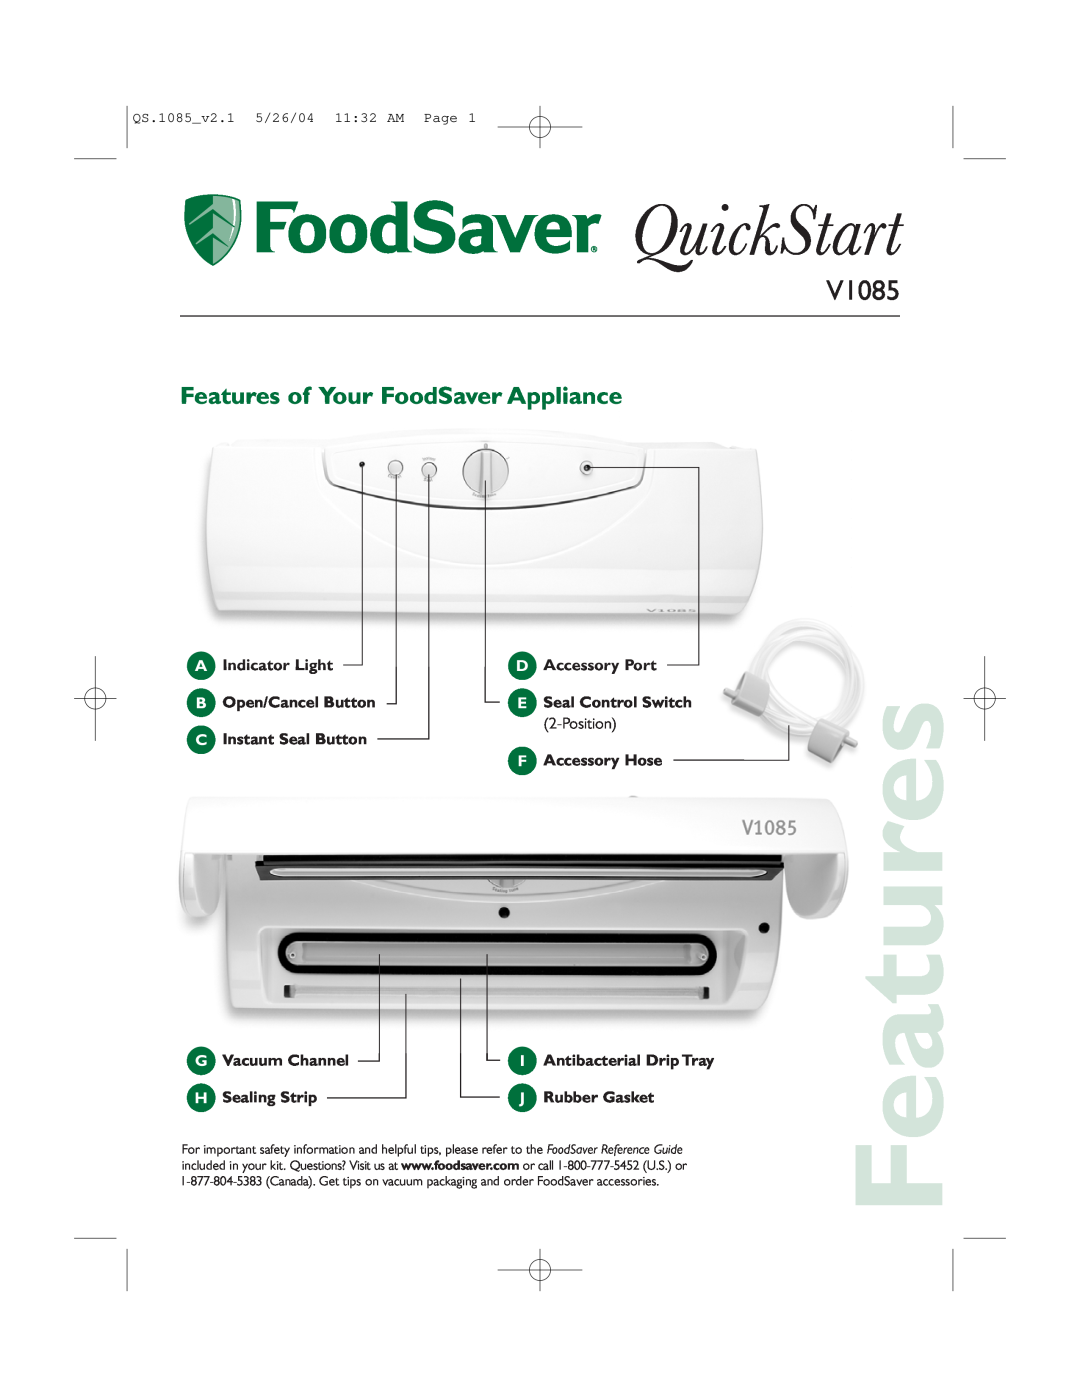 FoodSaver V1085 quick start Features of Your FoodSaver Appliance, QuickStart, Indicator Light, Accessory Port 